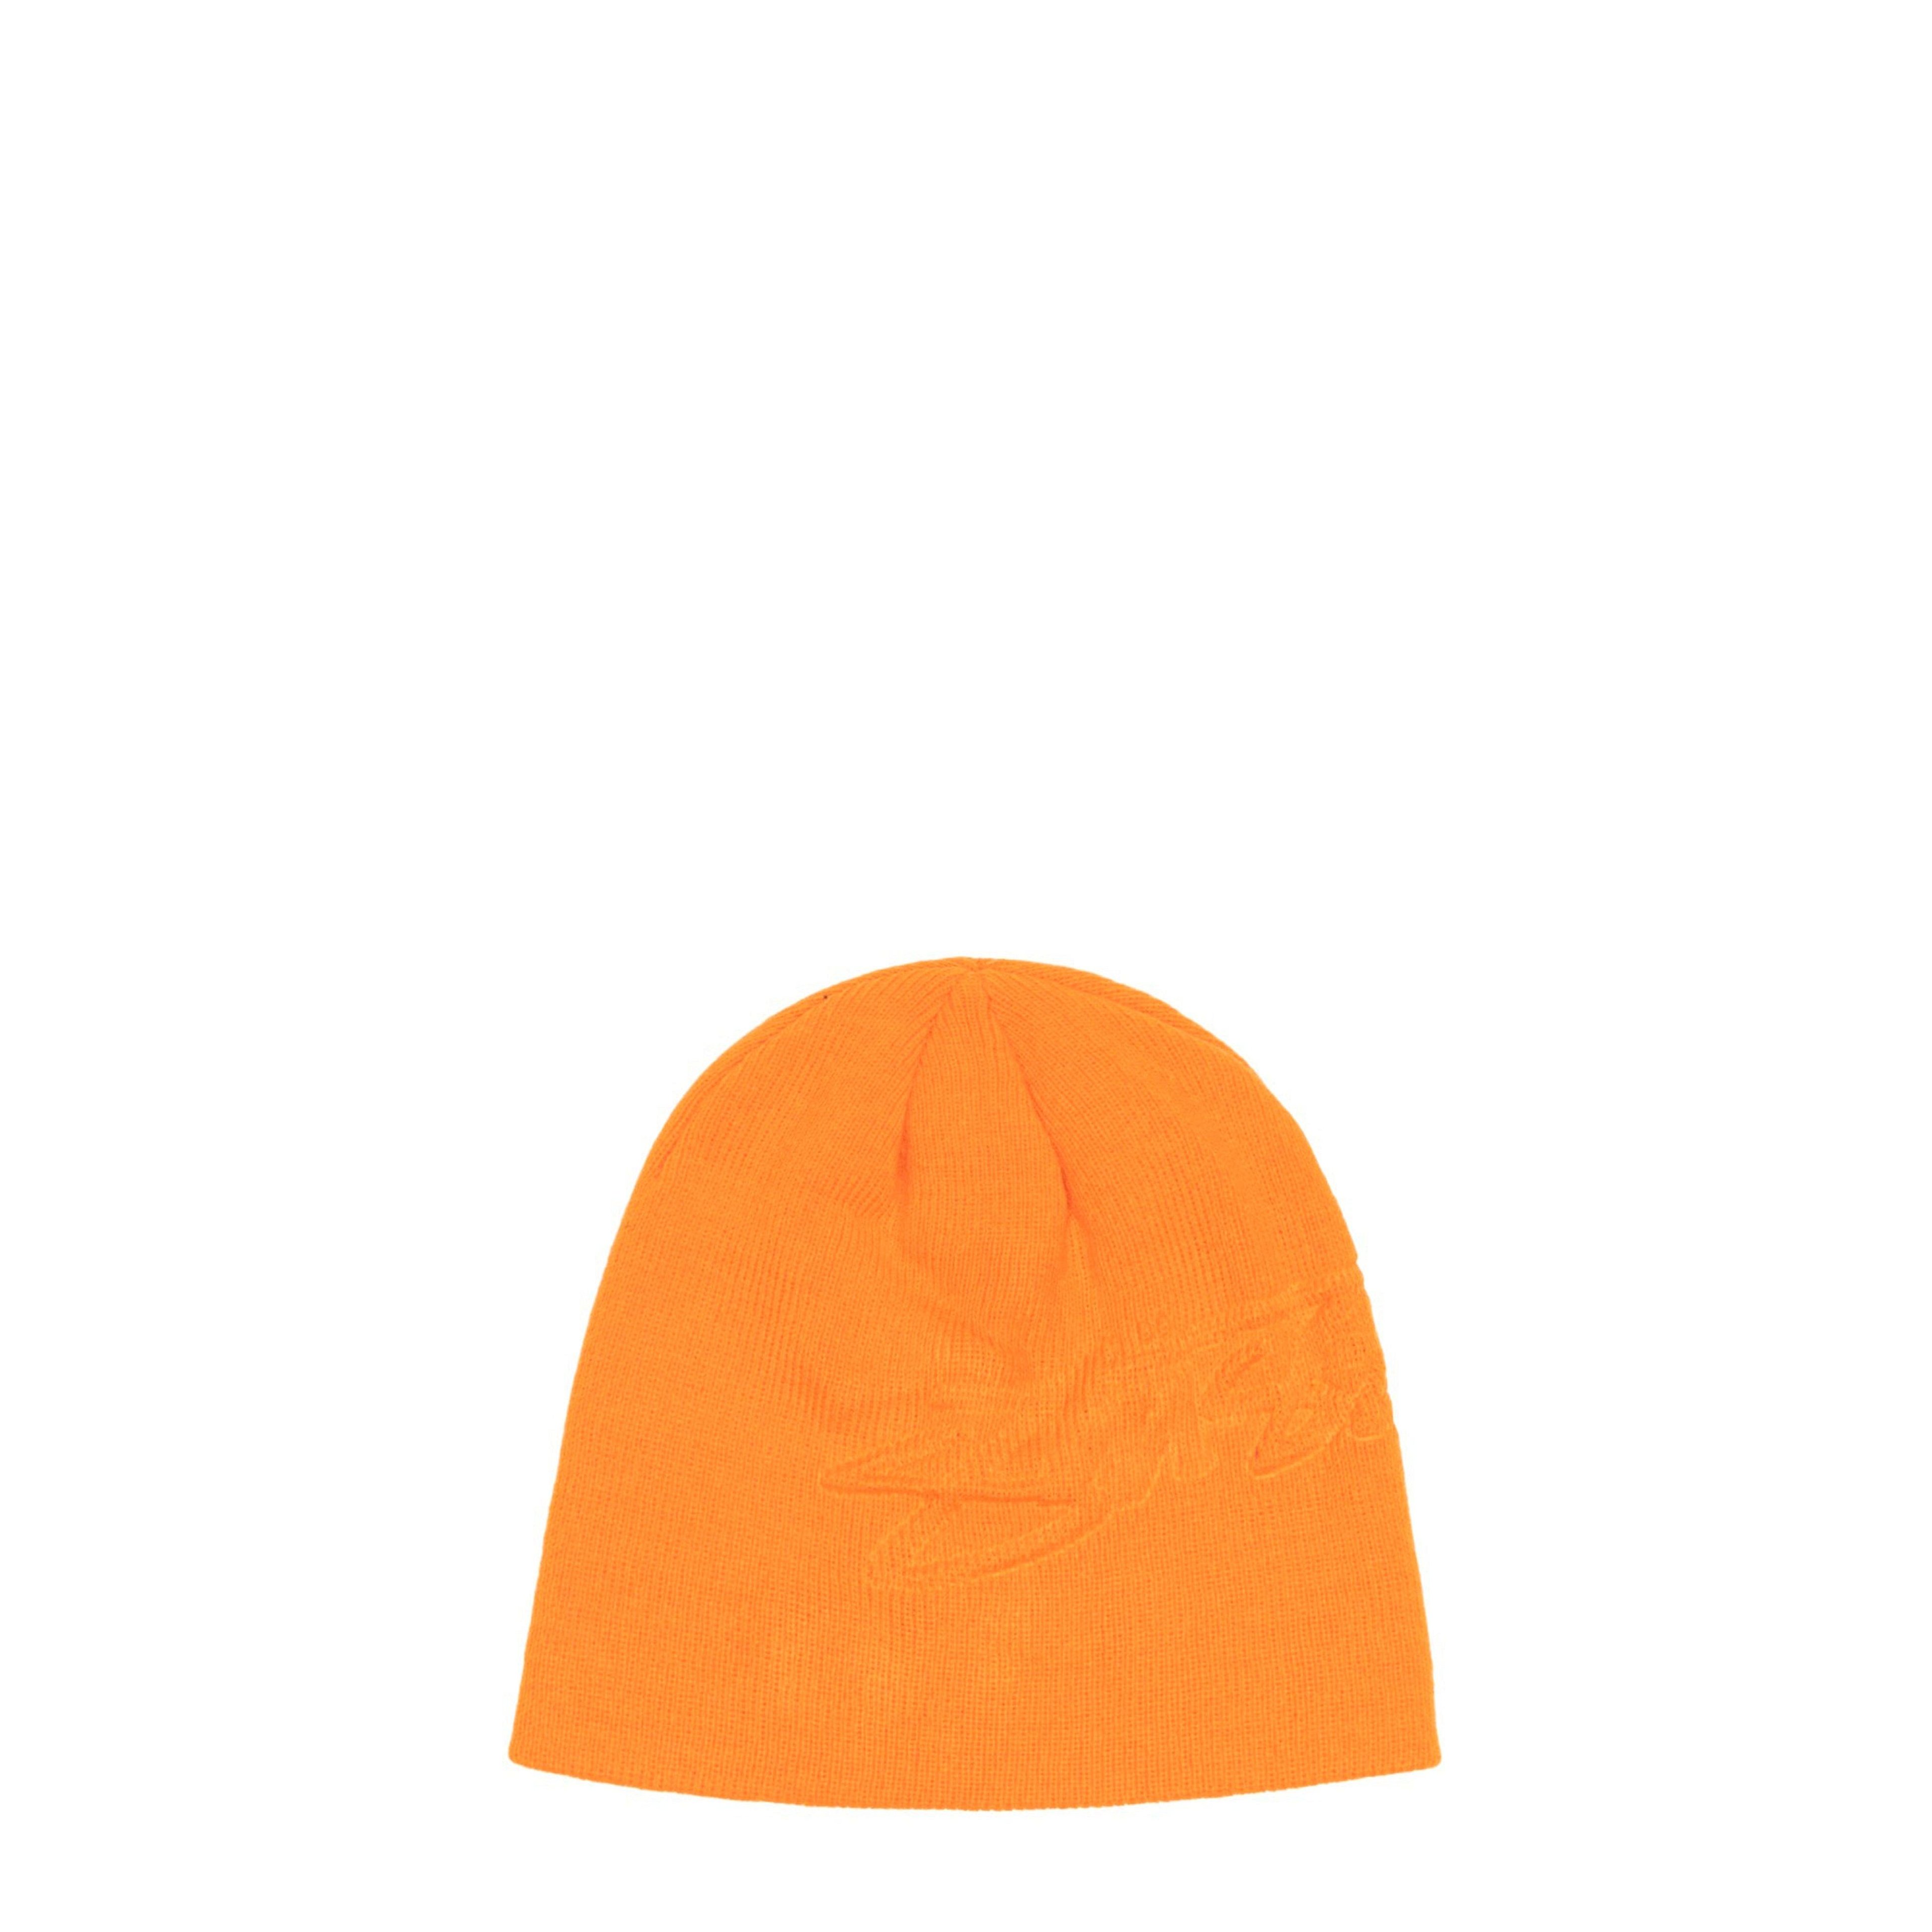 Stüssy - Embossed Smooth Stock Skullcap - (Orange) by STUSSY